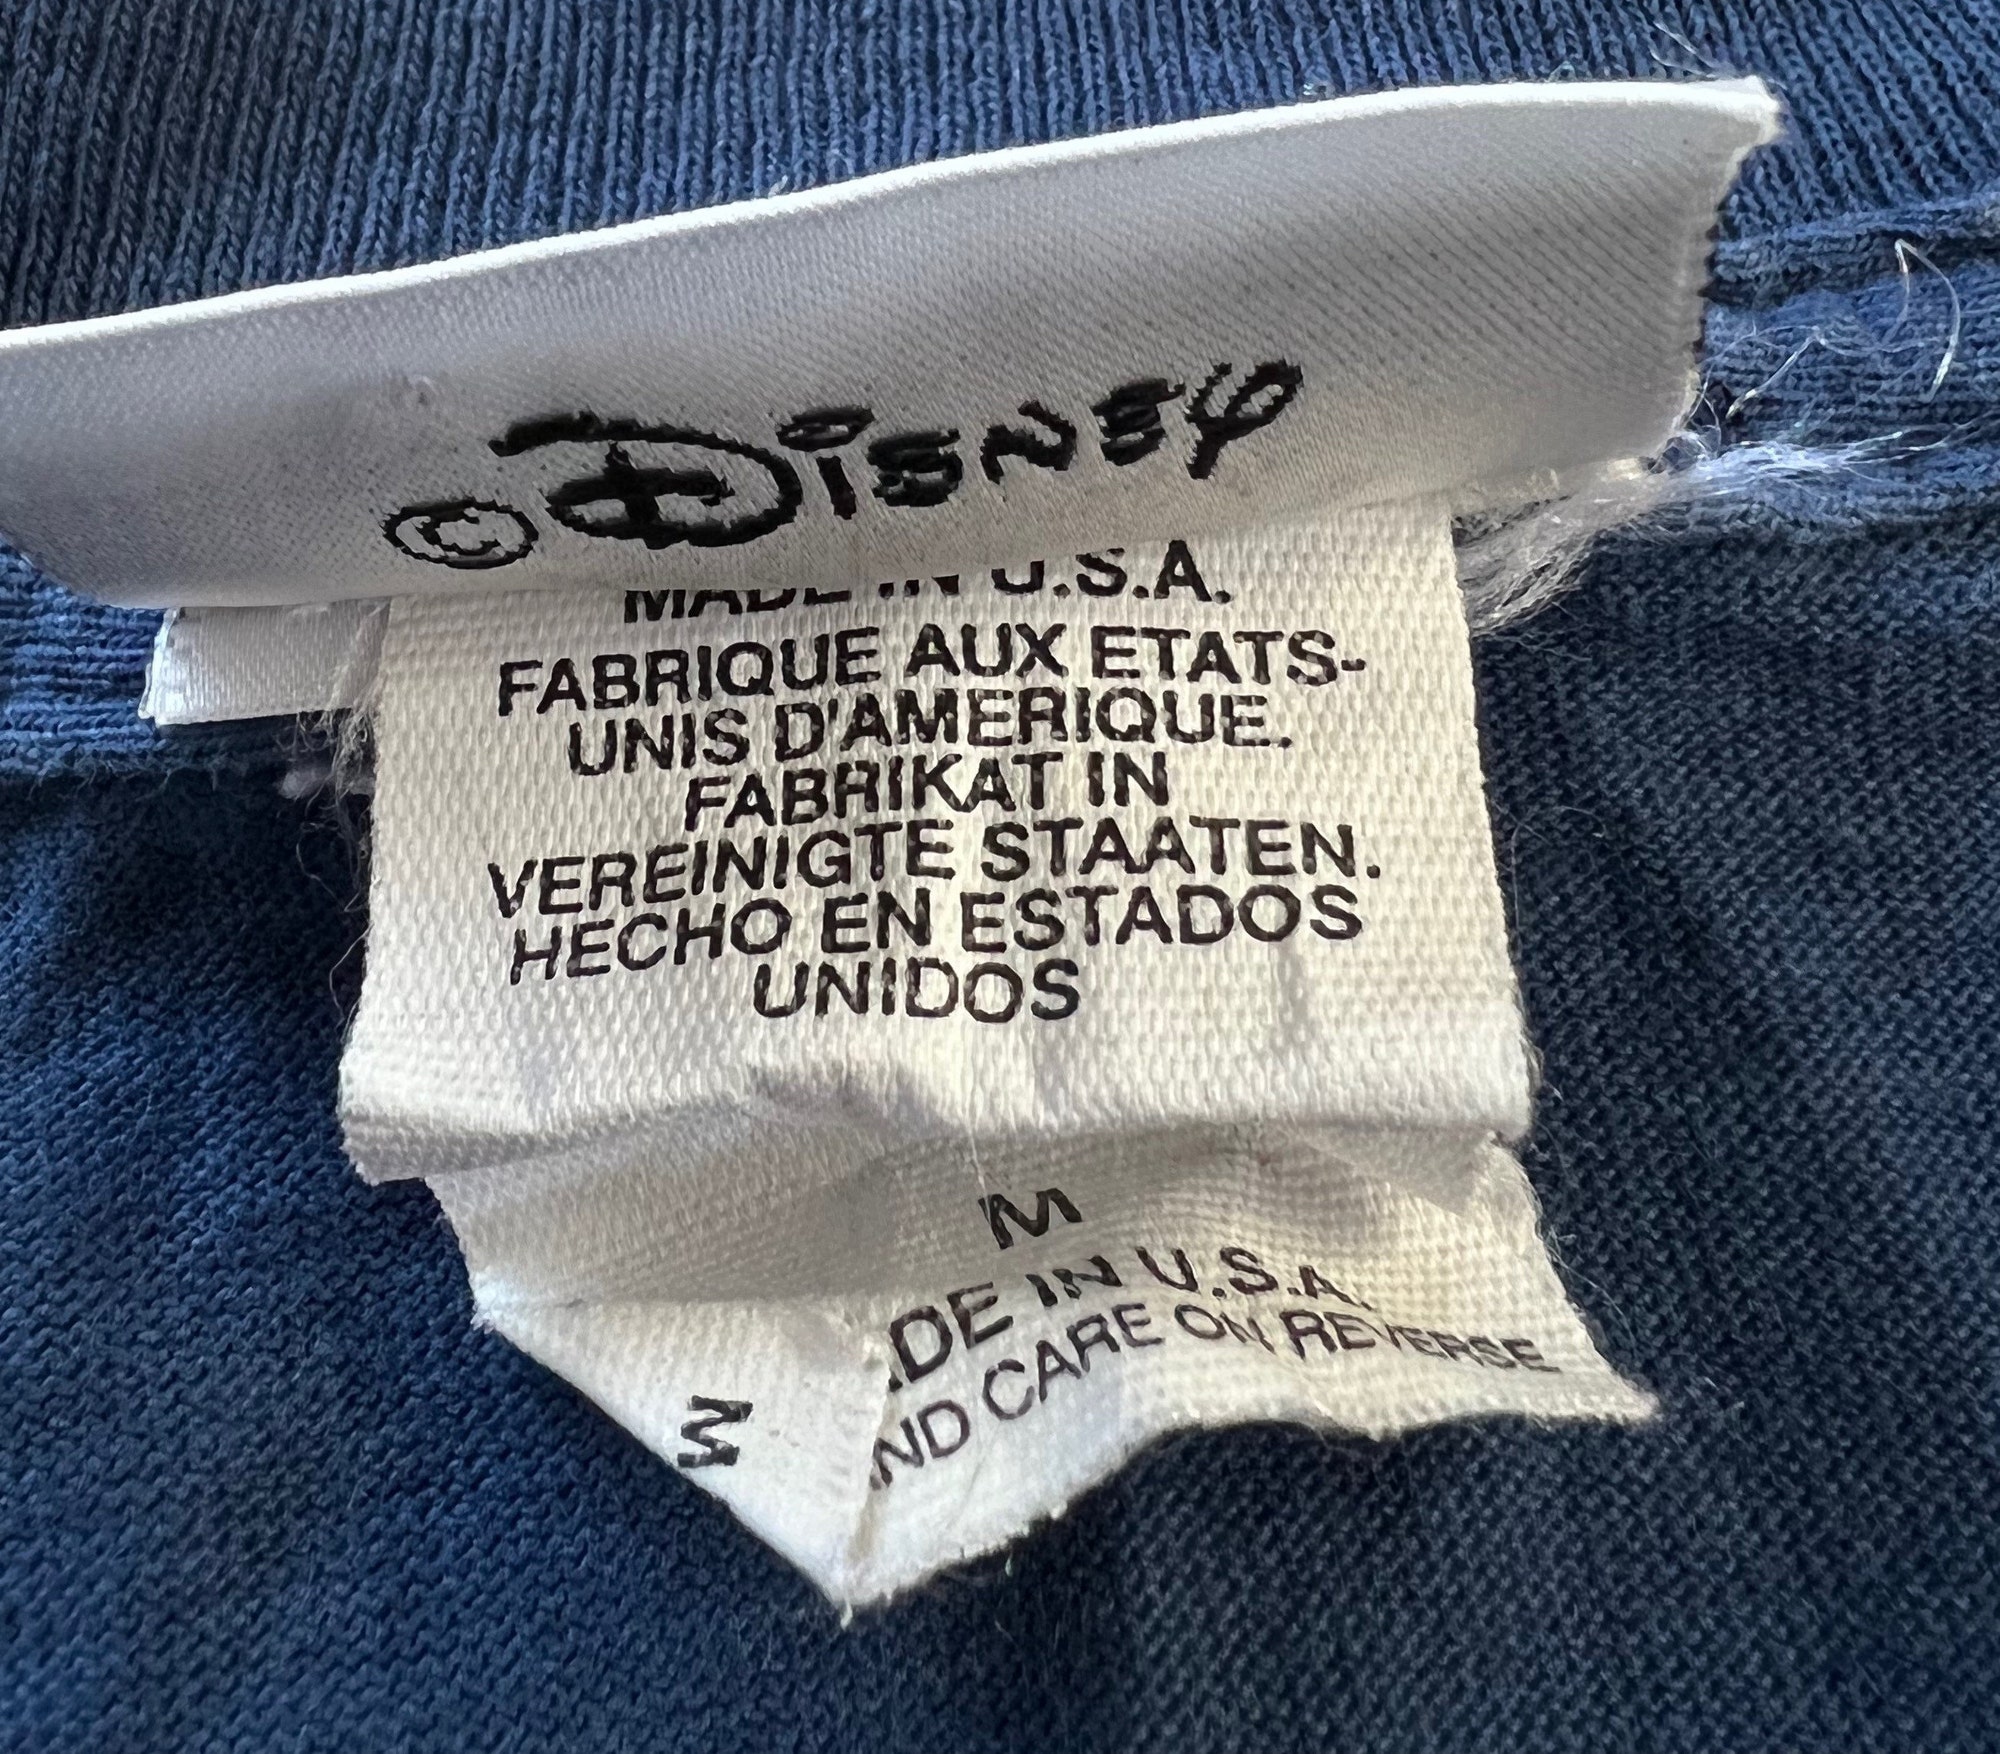 Vintage 90s Mickey Mouse T-Shirt, Disneyland